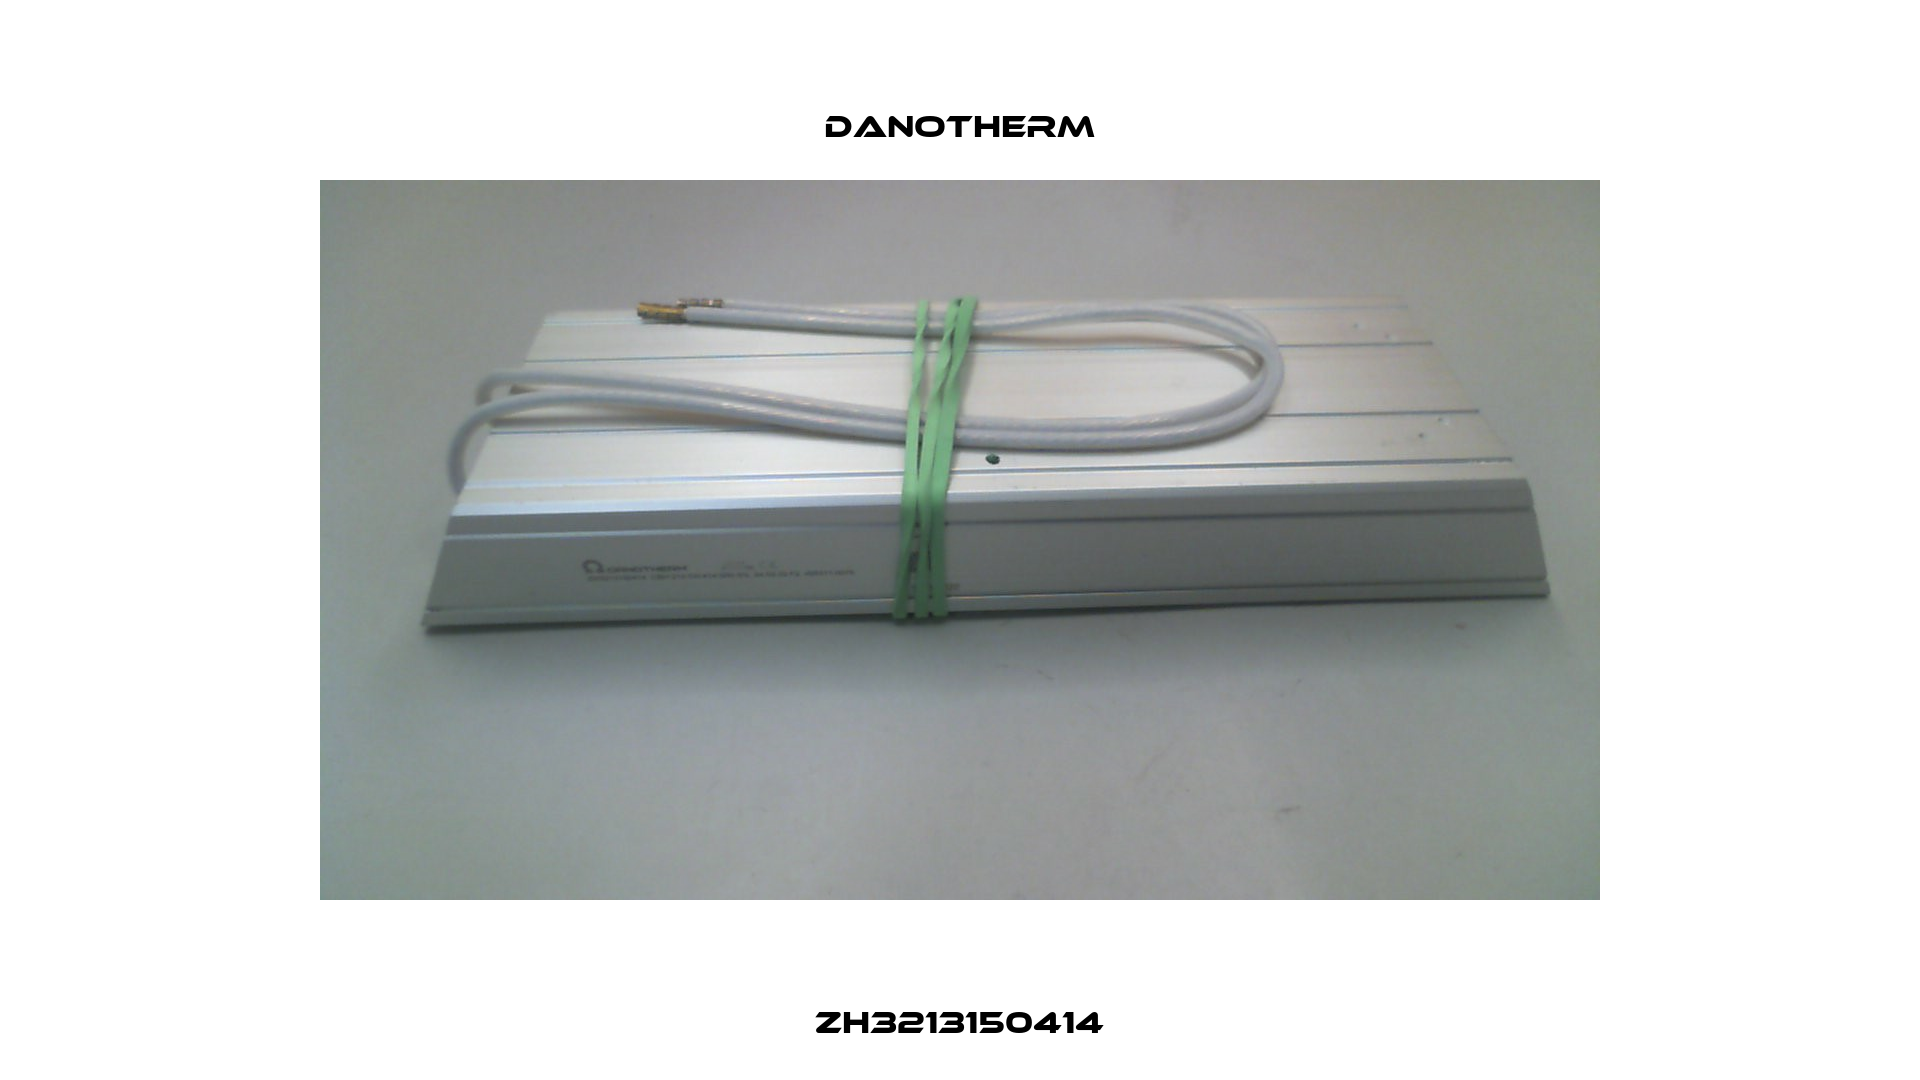 ZH3213150414 Danotherm